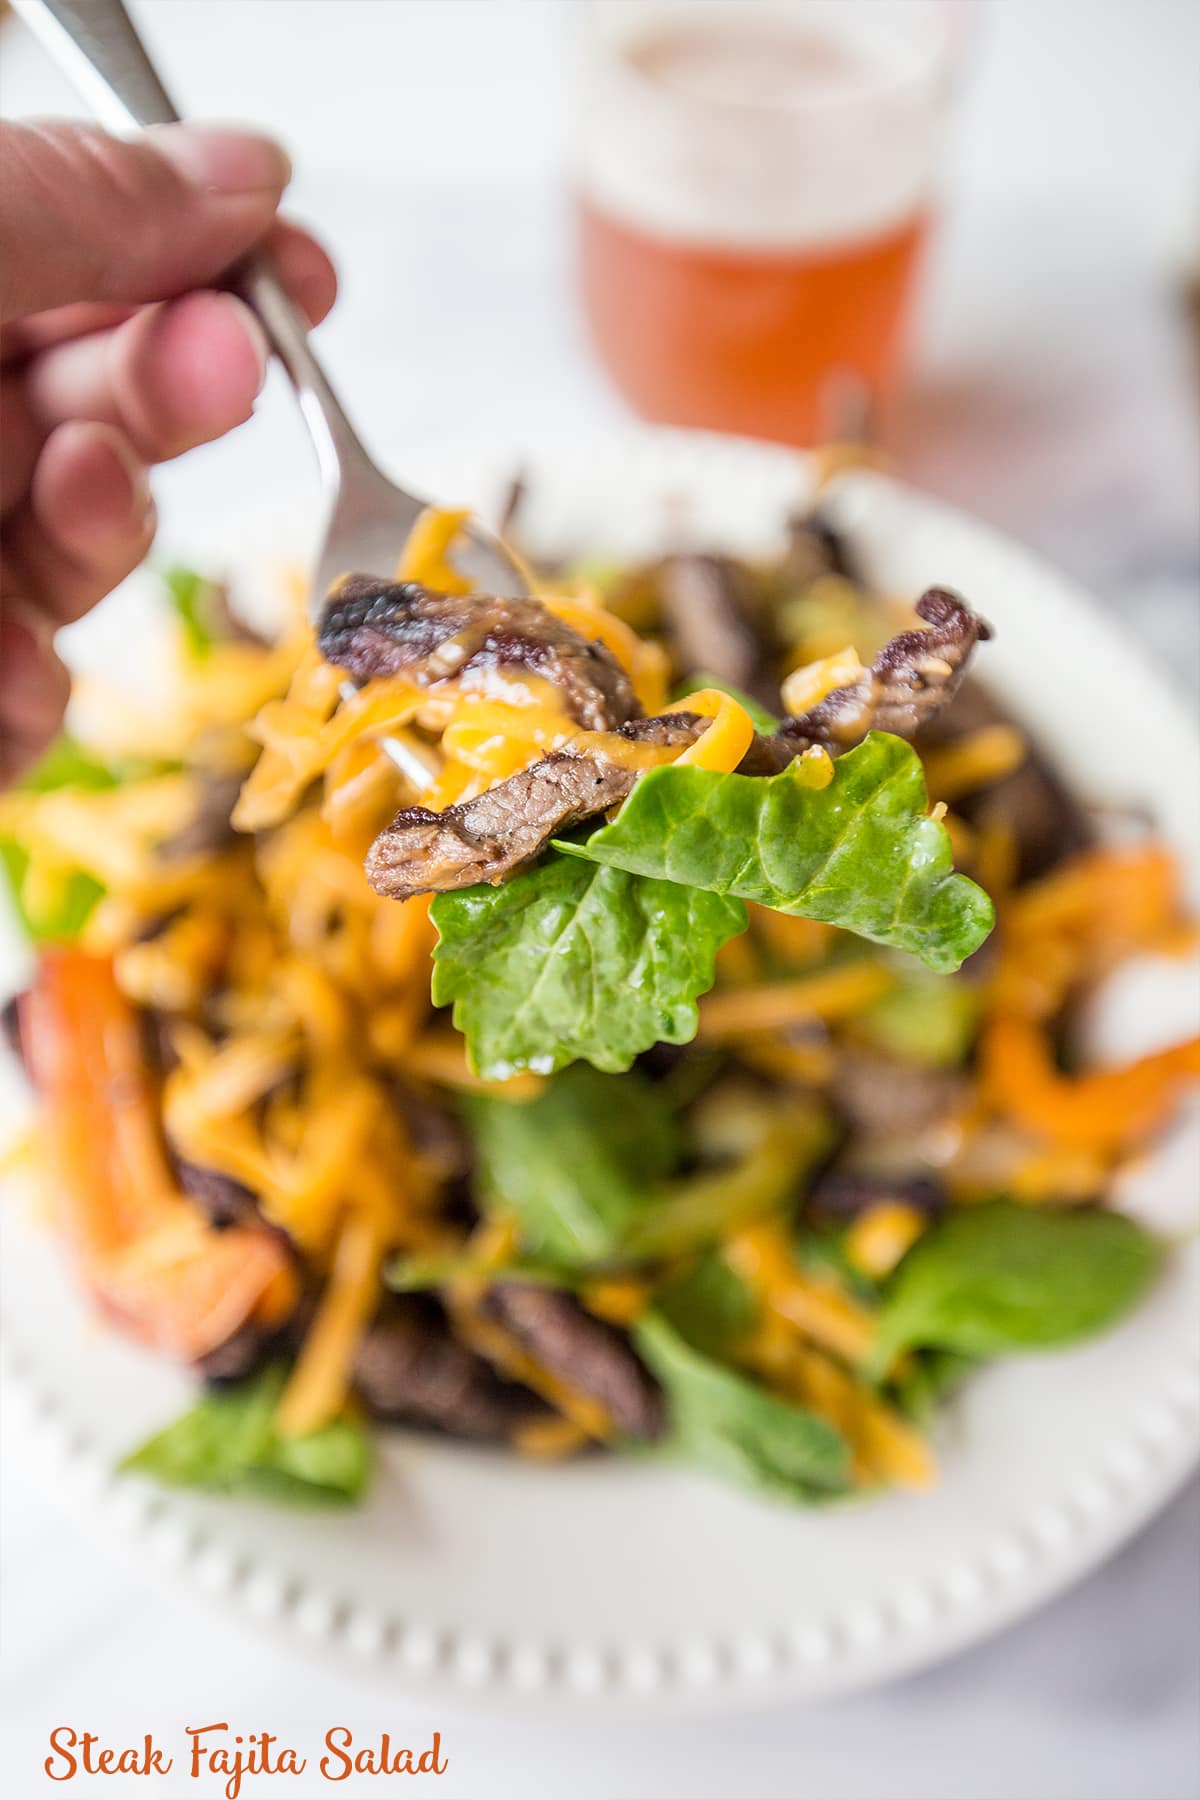 Steak fajita salad- the best way to get restaurant style fajitas at home!